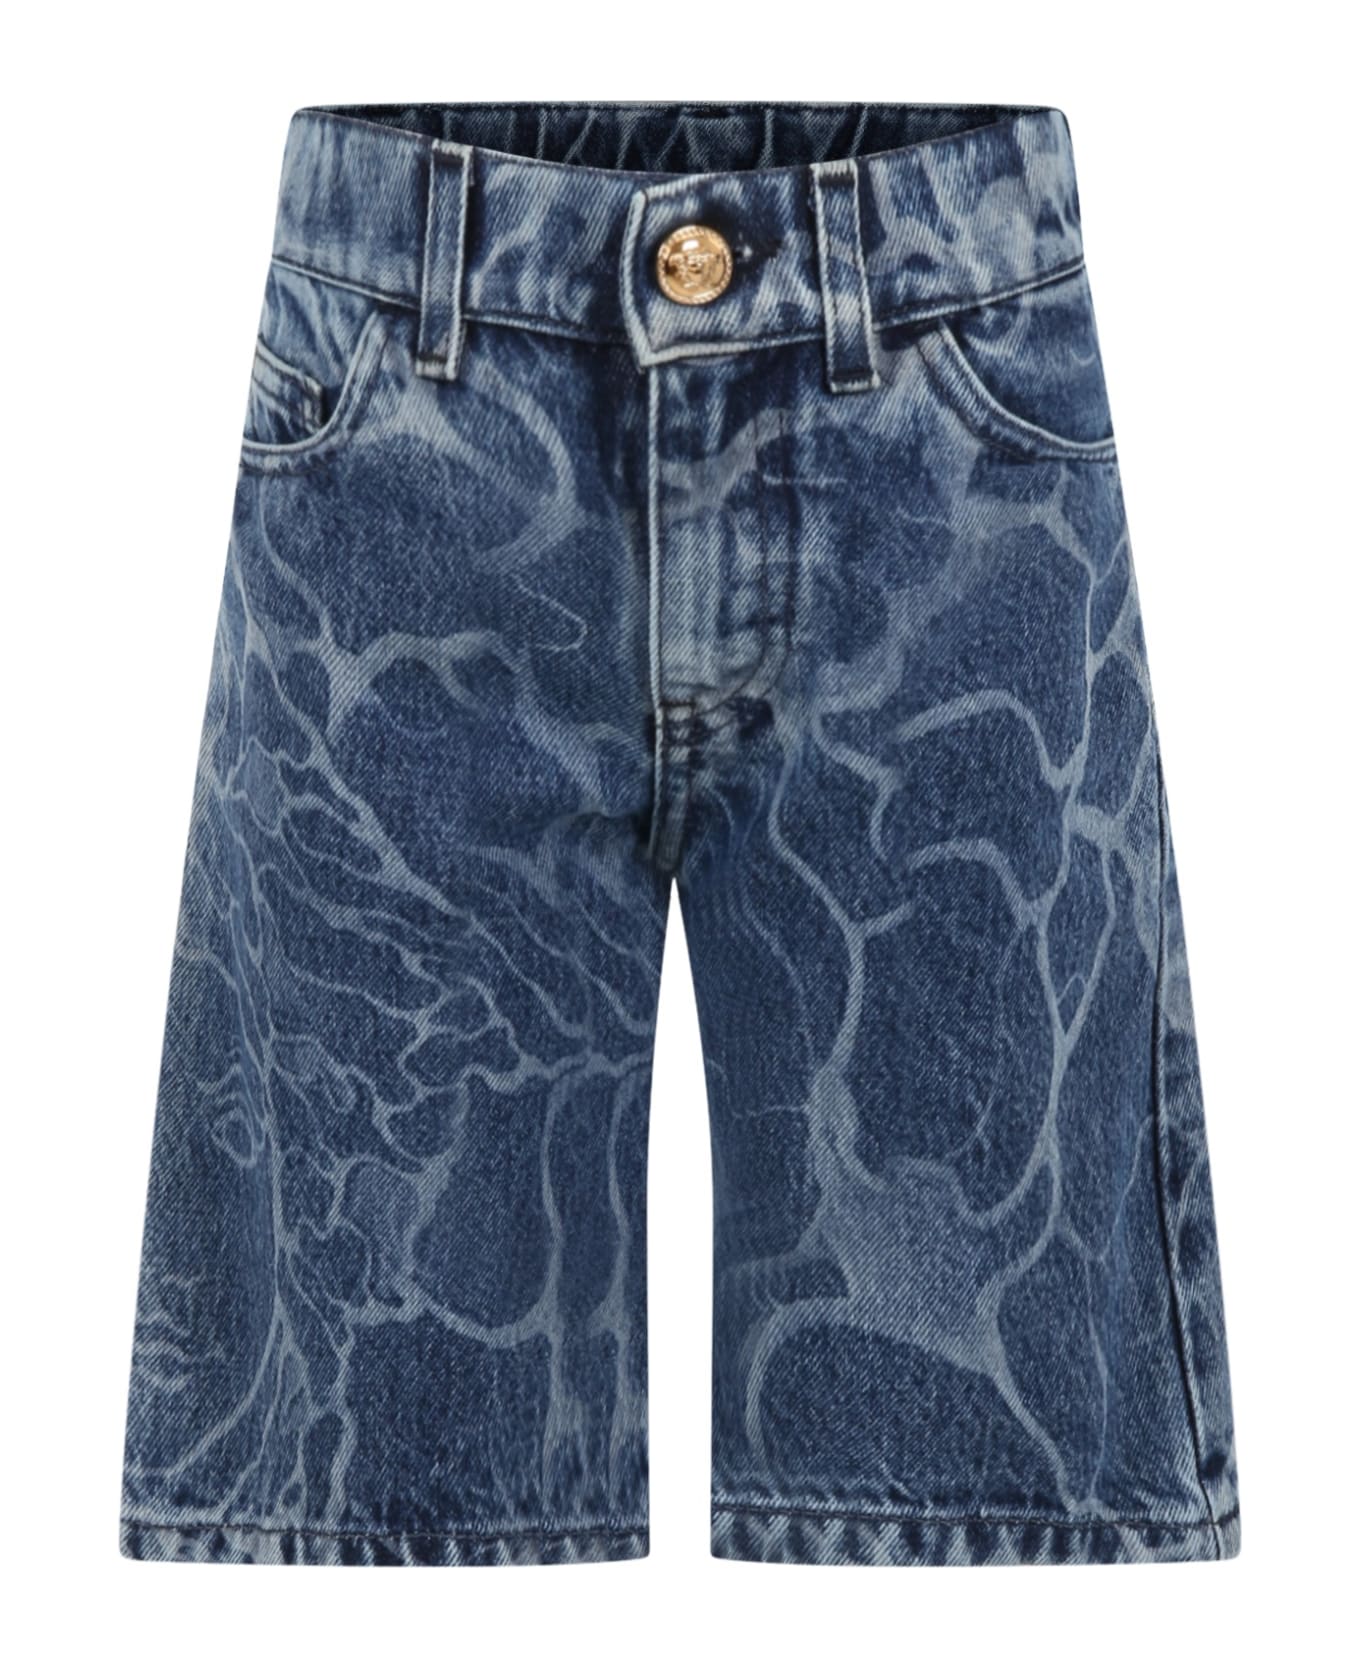 Versace Blue Jeans Bermuda Shorts For Boy With Print Medusa - Denim